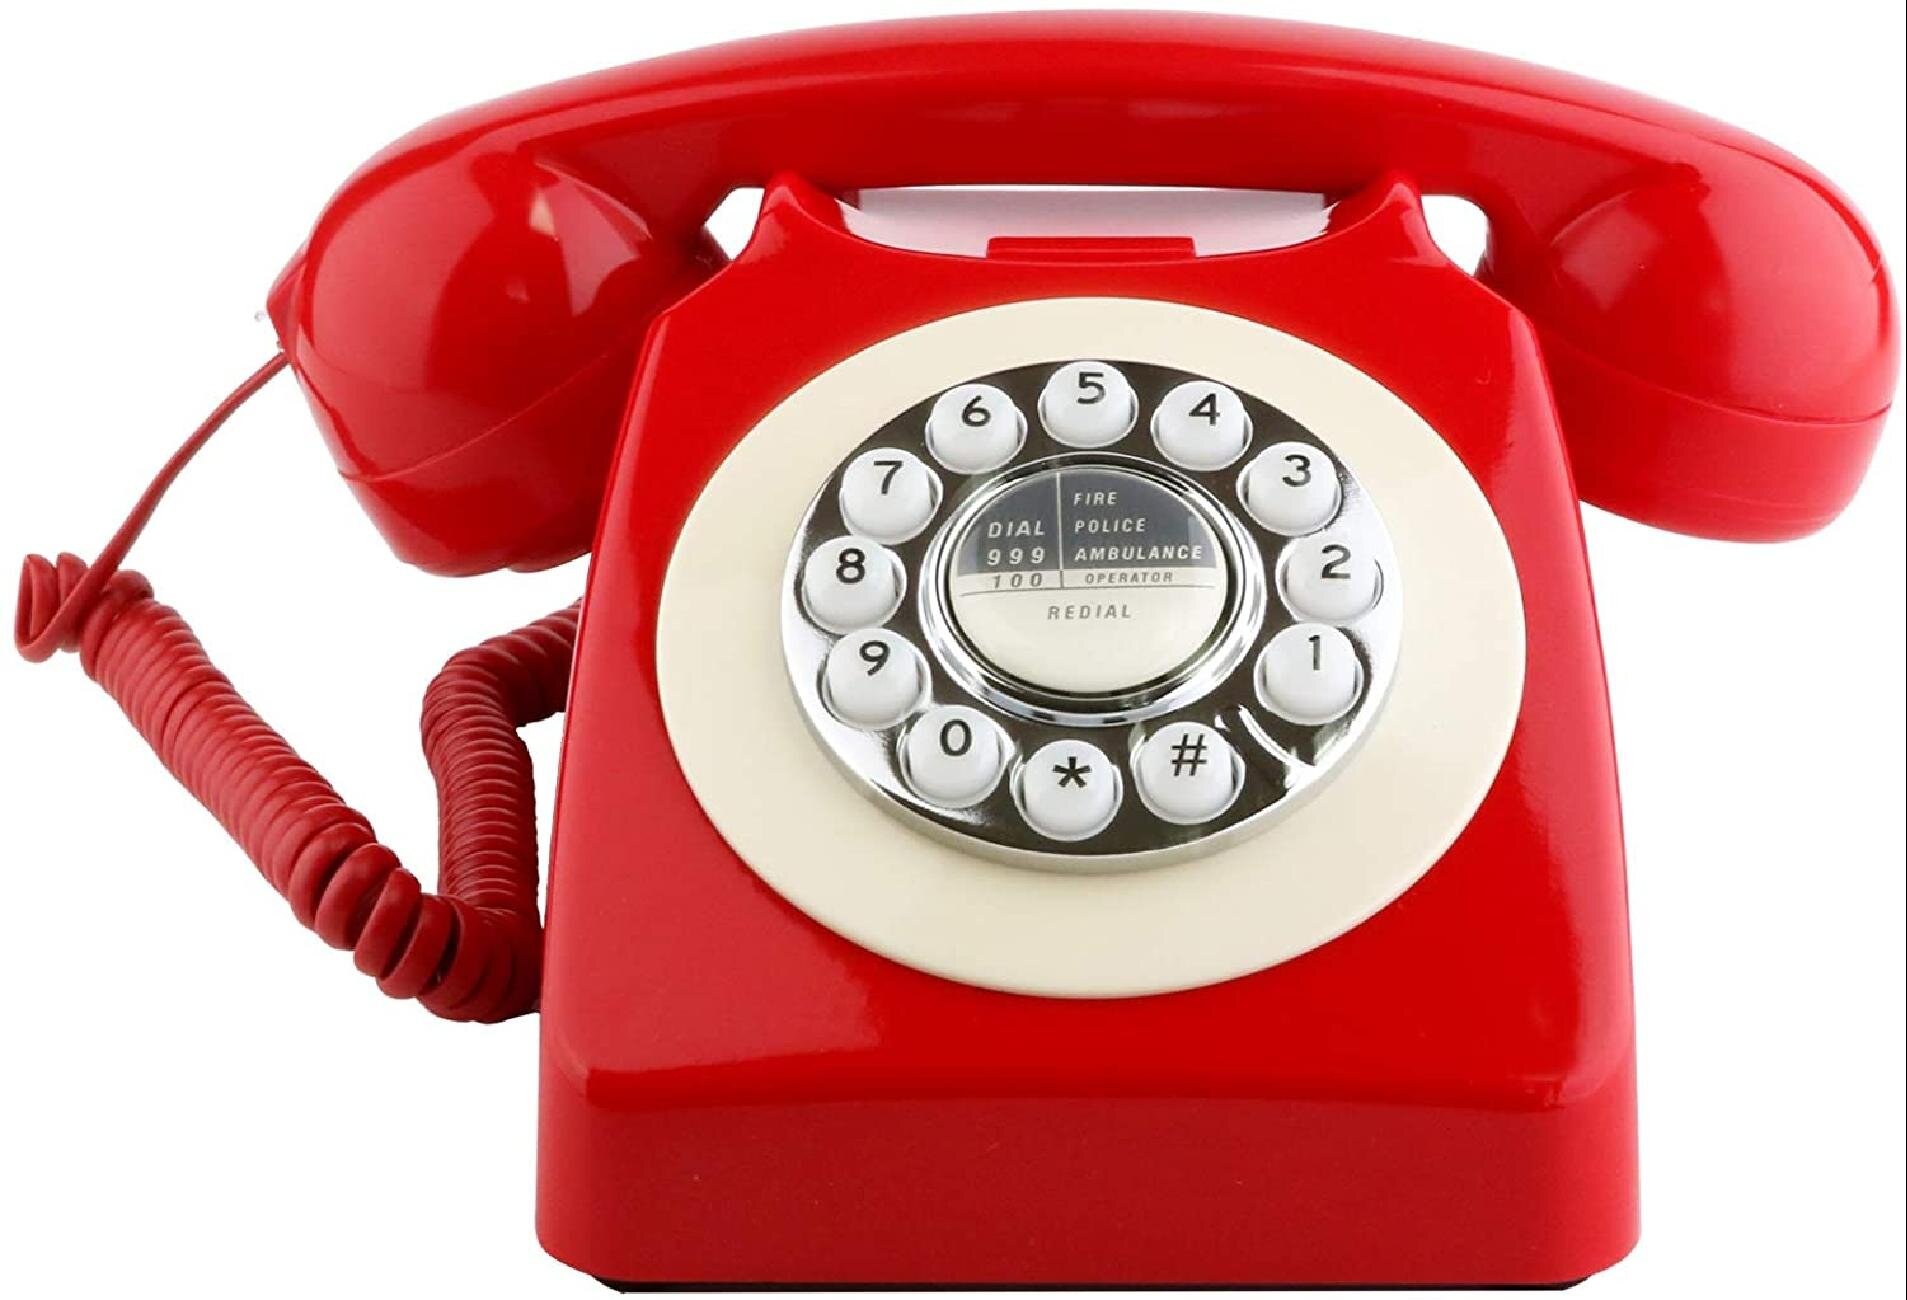 Vintage Corded Telephone Desktop Retro Phone for Home Office Hotel Landline ABS 